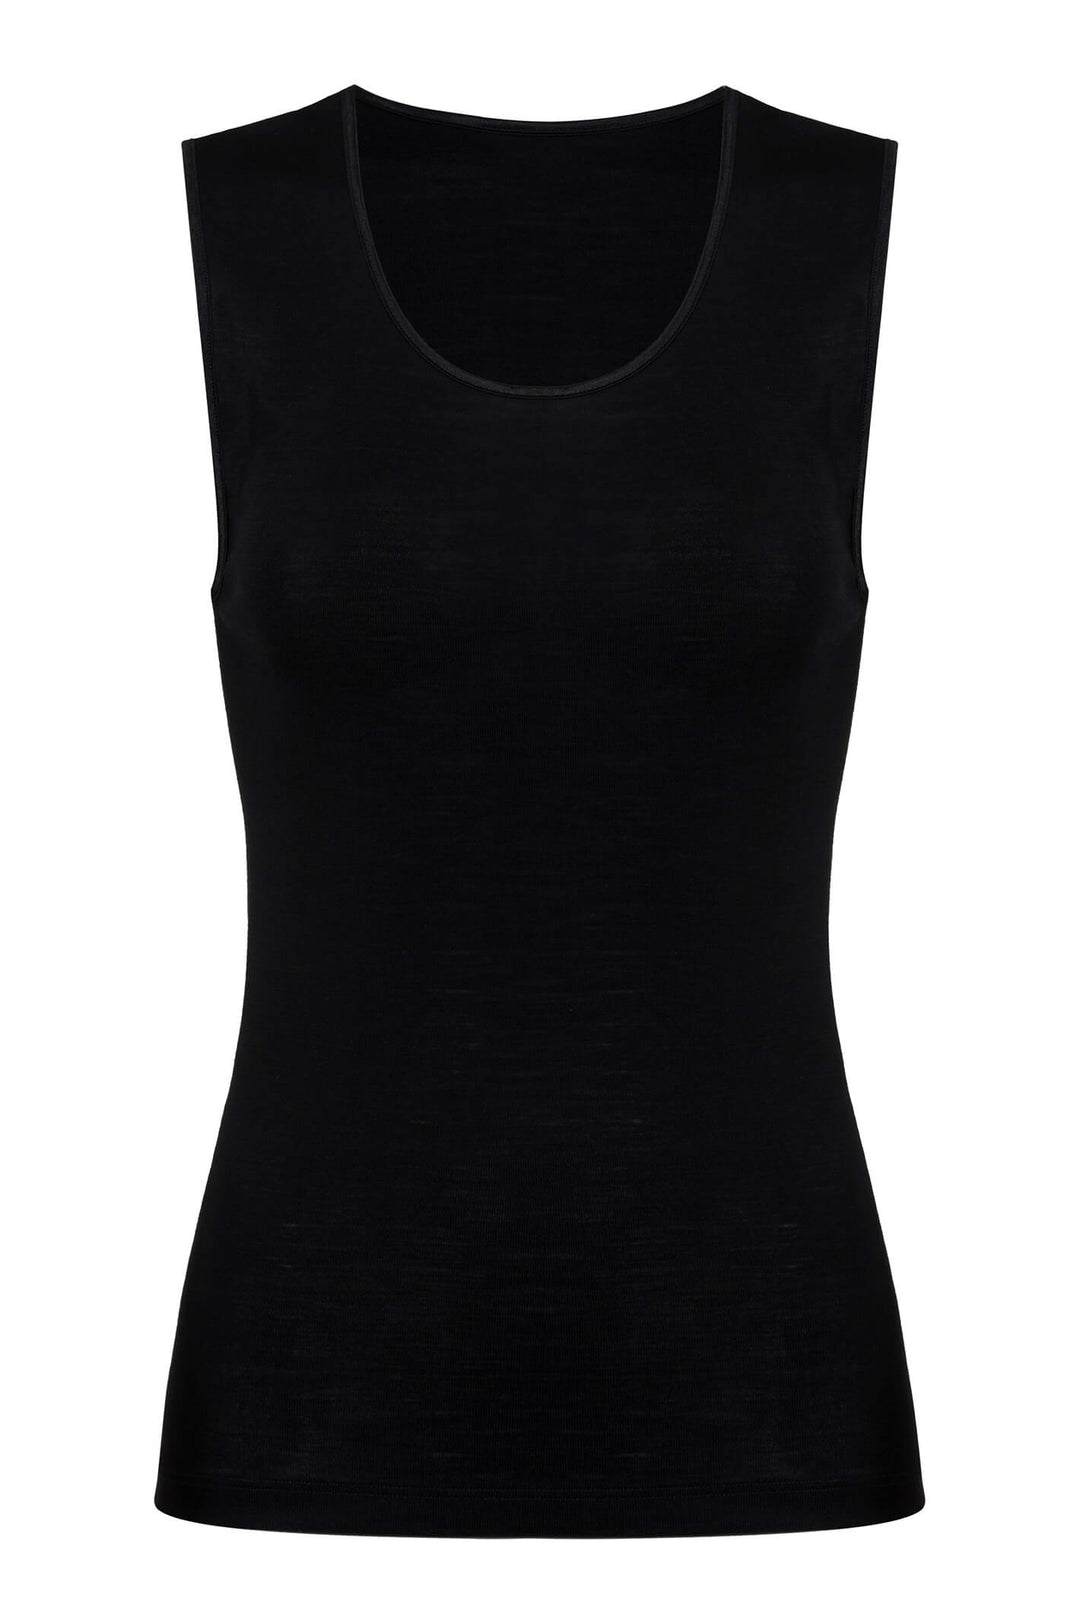 Mey 66575 My Basics Black Exquisite Sleeveless Vest - Shirley Allum Boutique